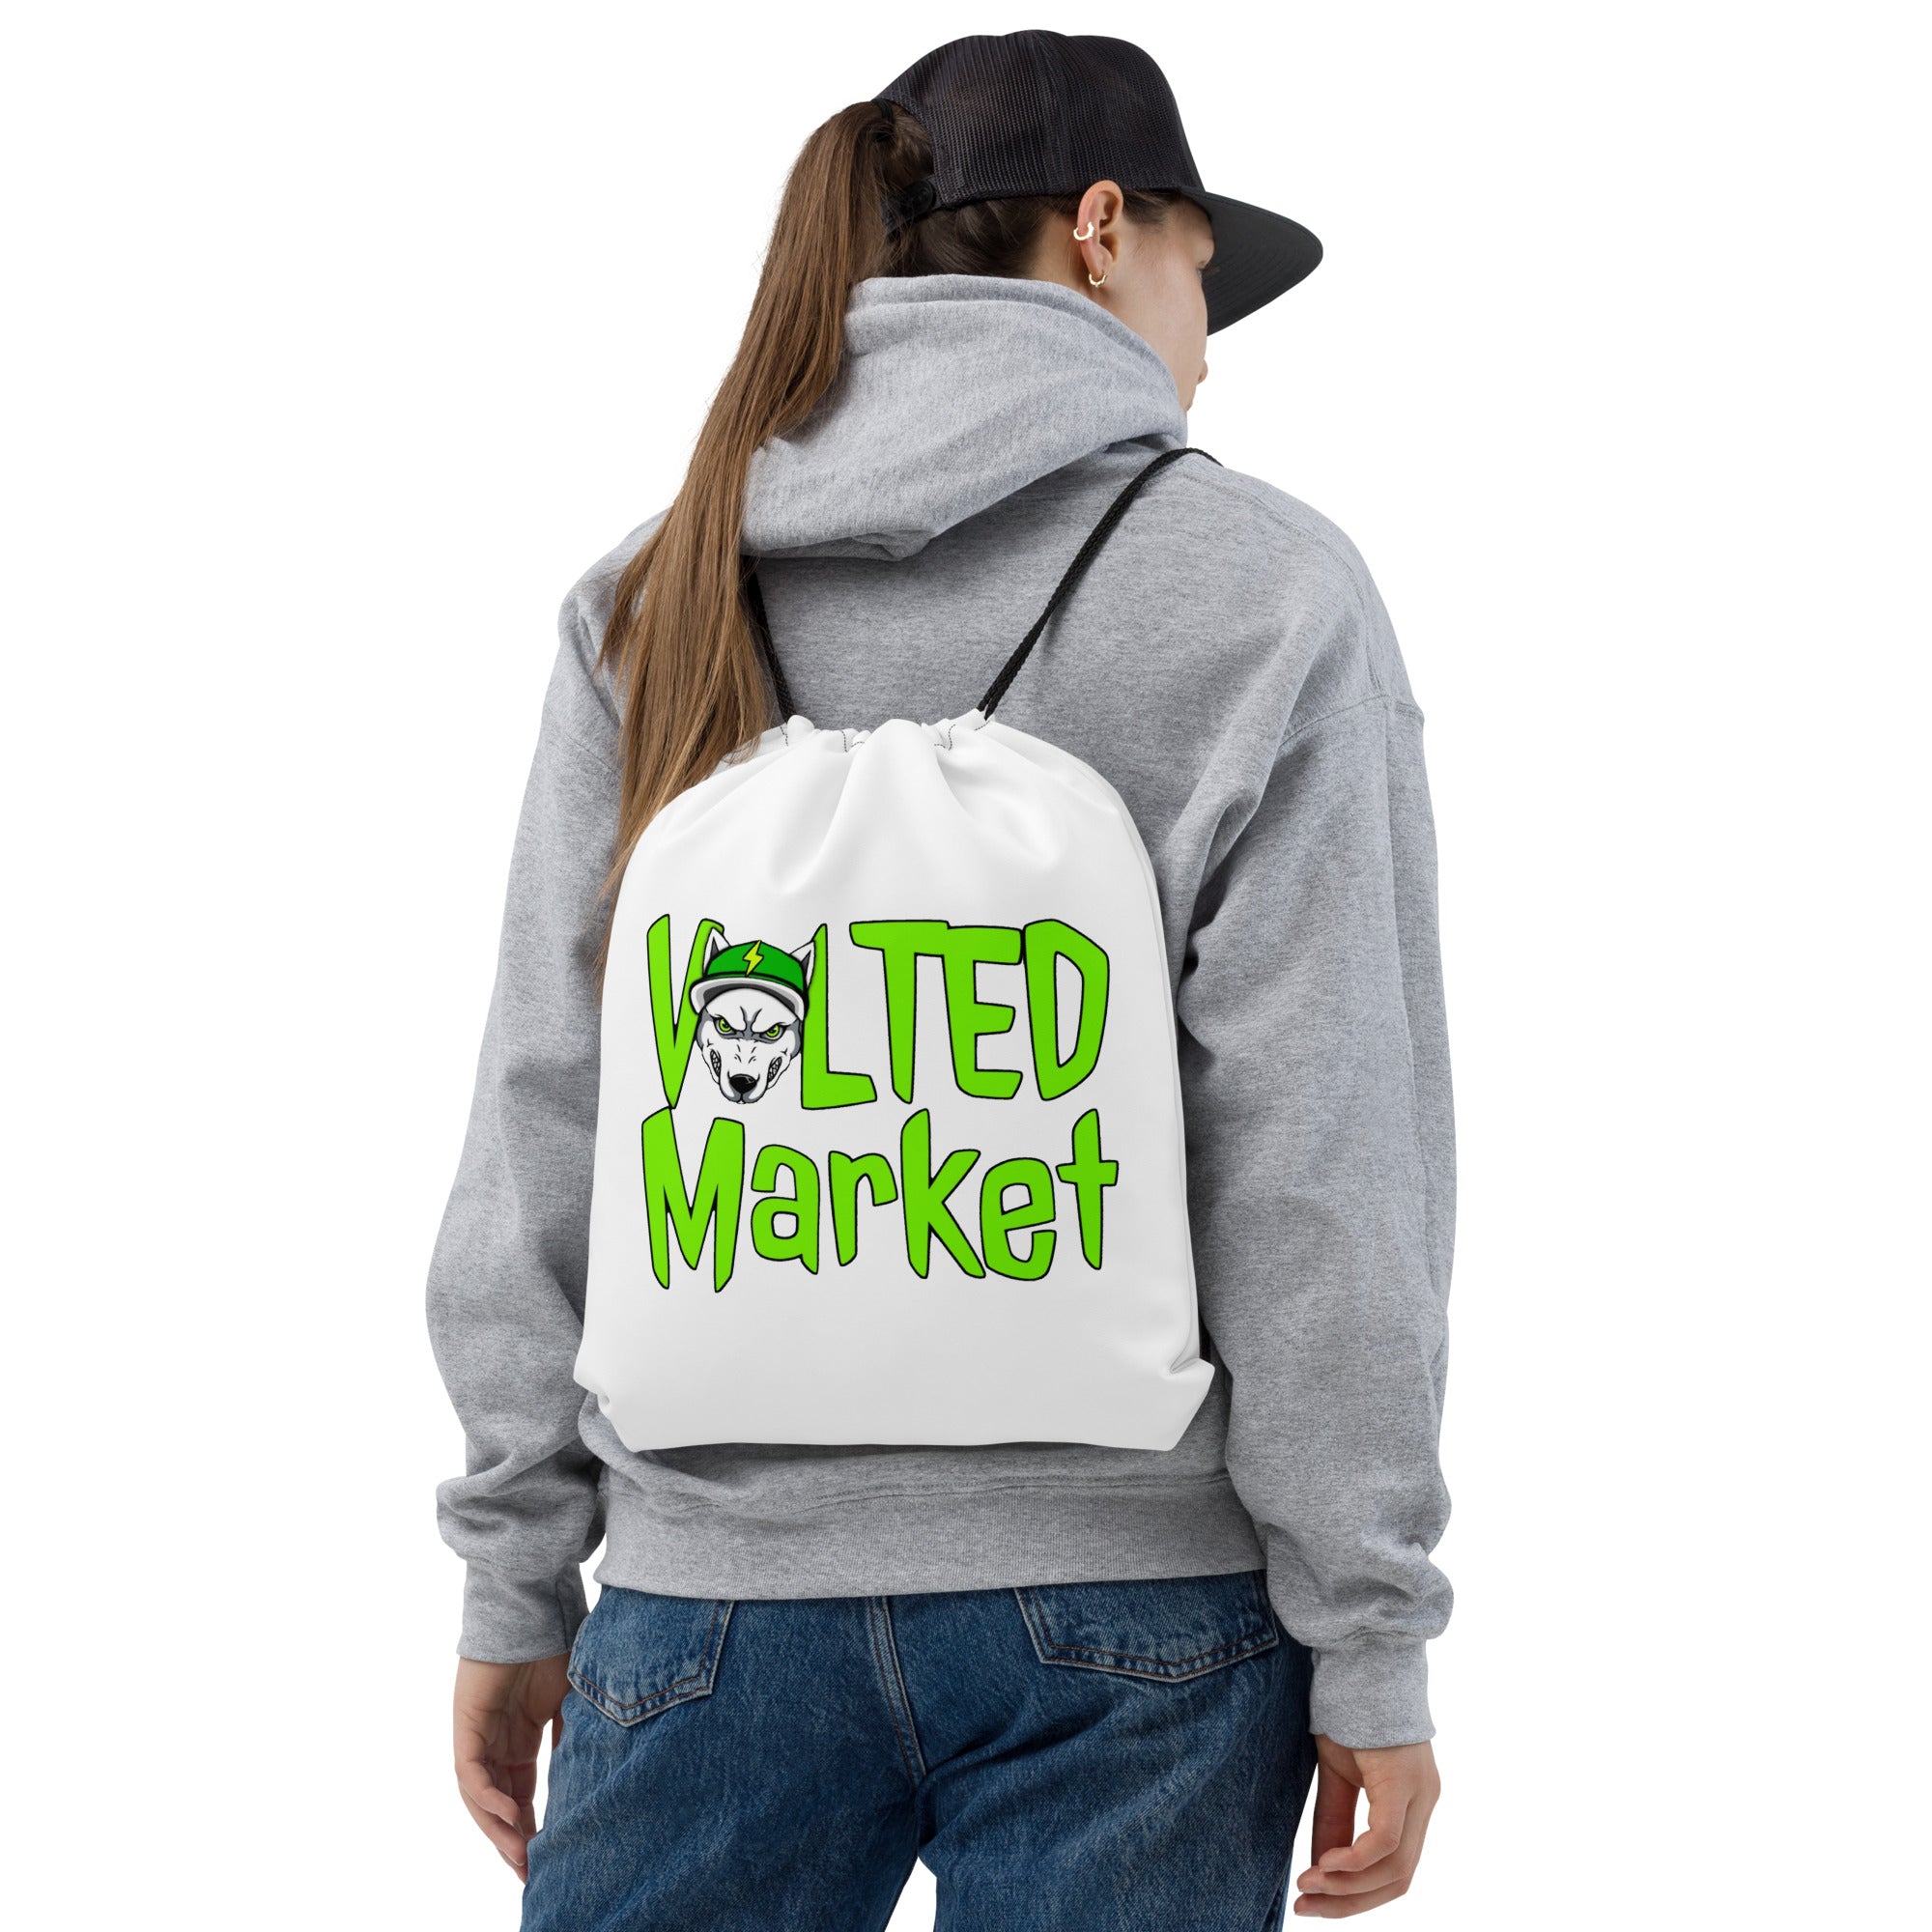 Volted Market Drawstring bag - NFTees365